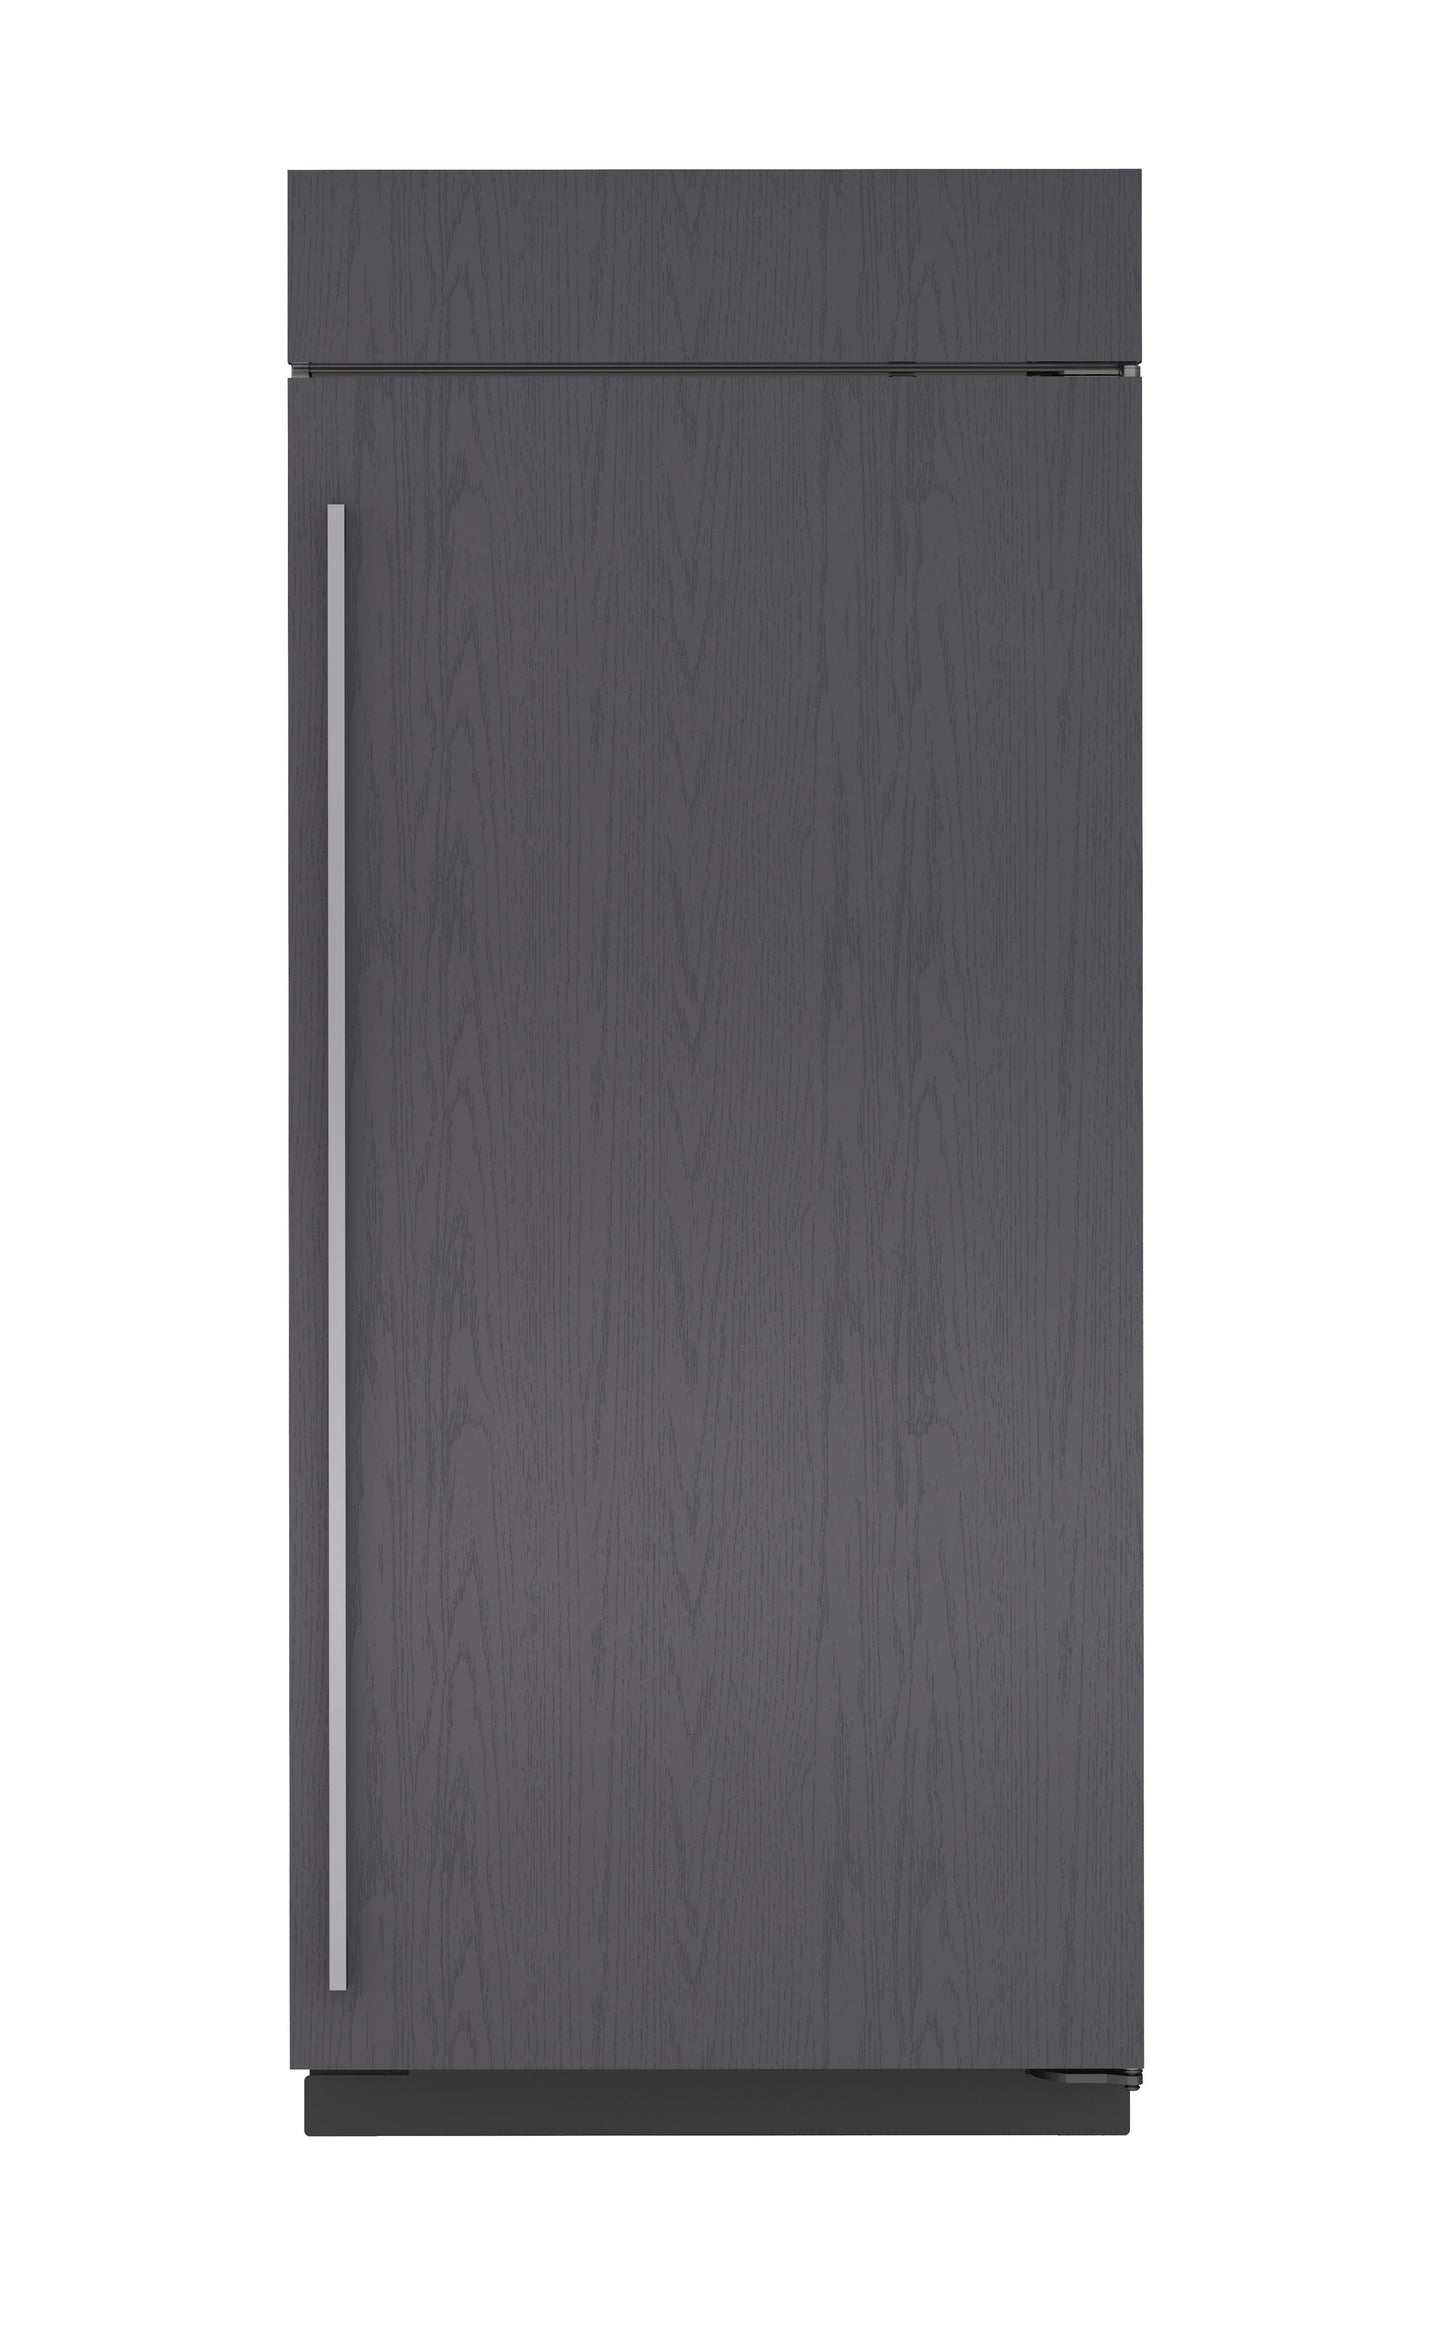 Sub-Zero CL3650RIDOR 36" Classic Refrigerator With Internal Dispenser - Panel Ready